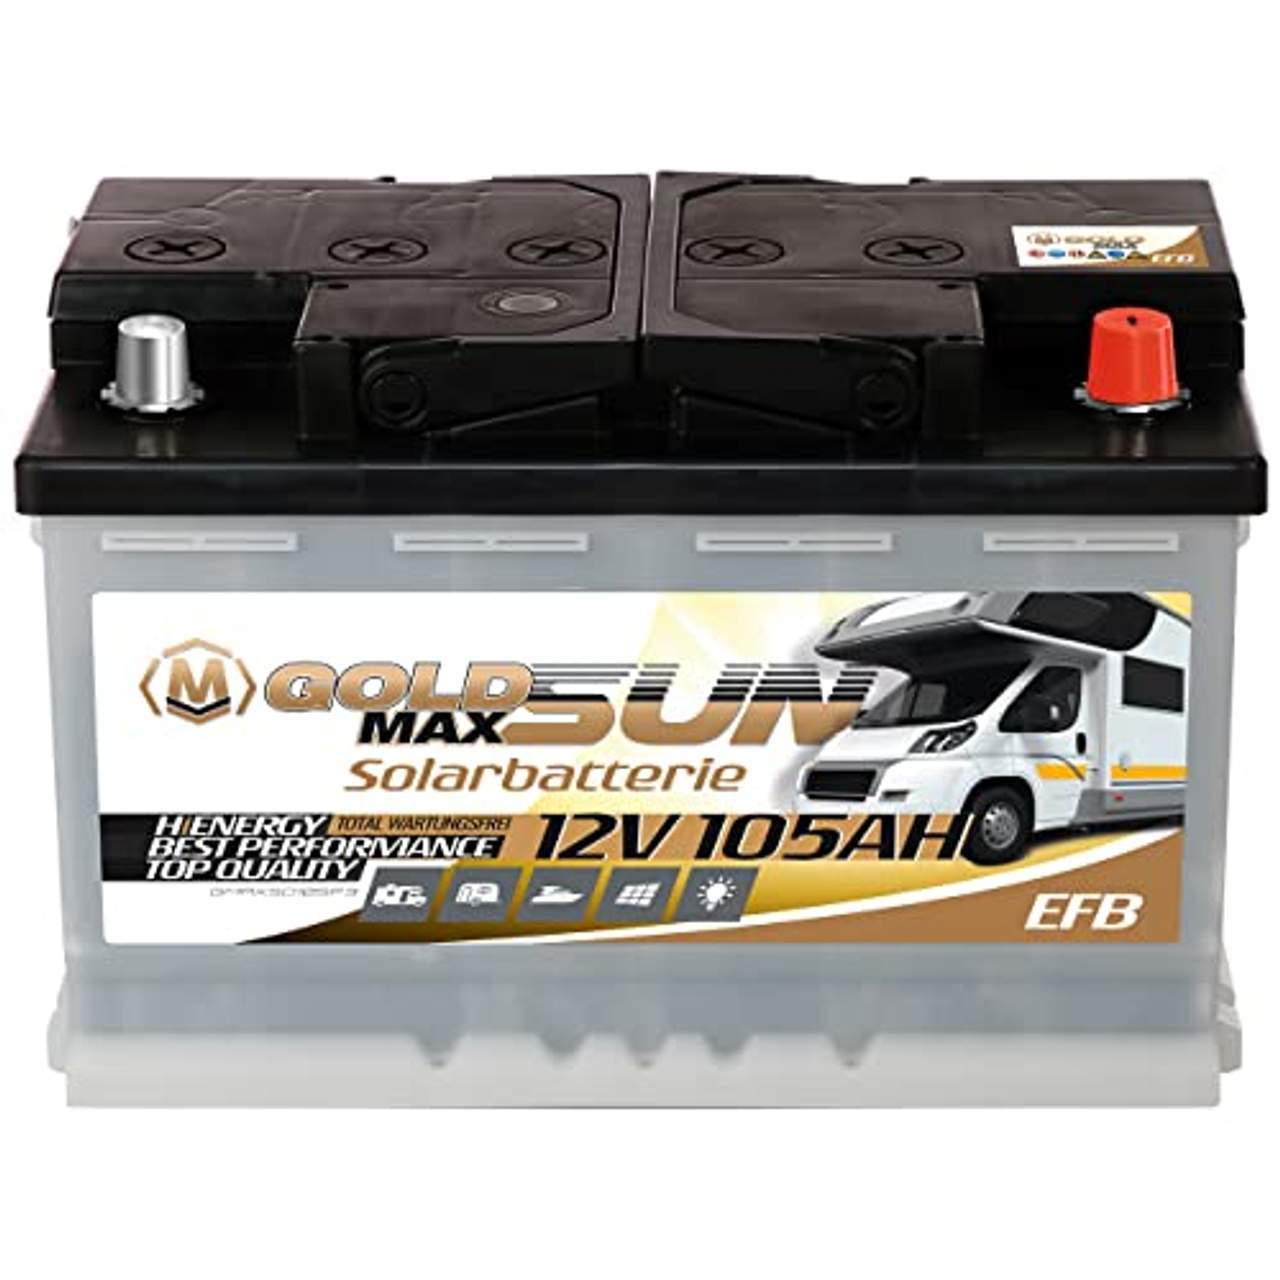 Solar Batterie 105Ah 12V GoldMax Versorger Wohnmobil Verbraucher